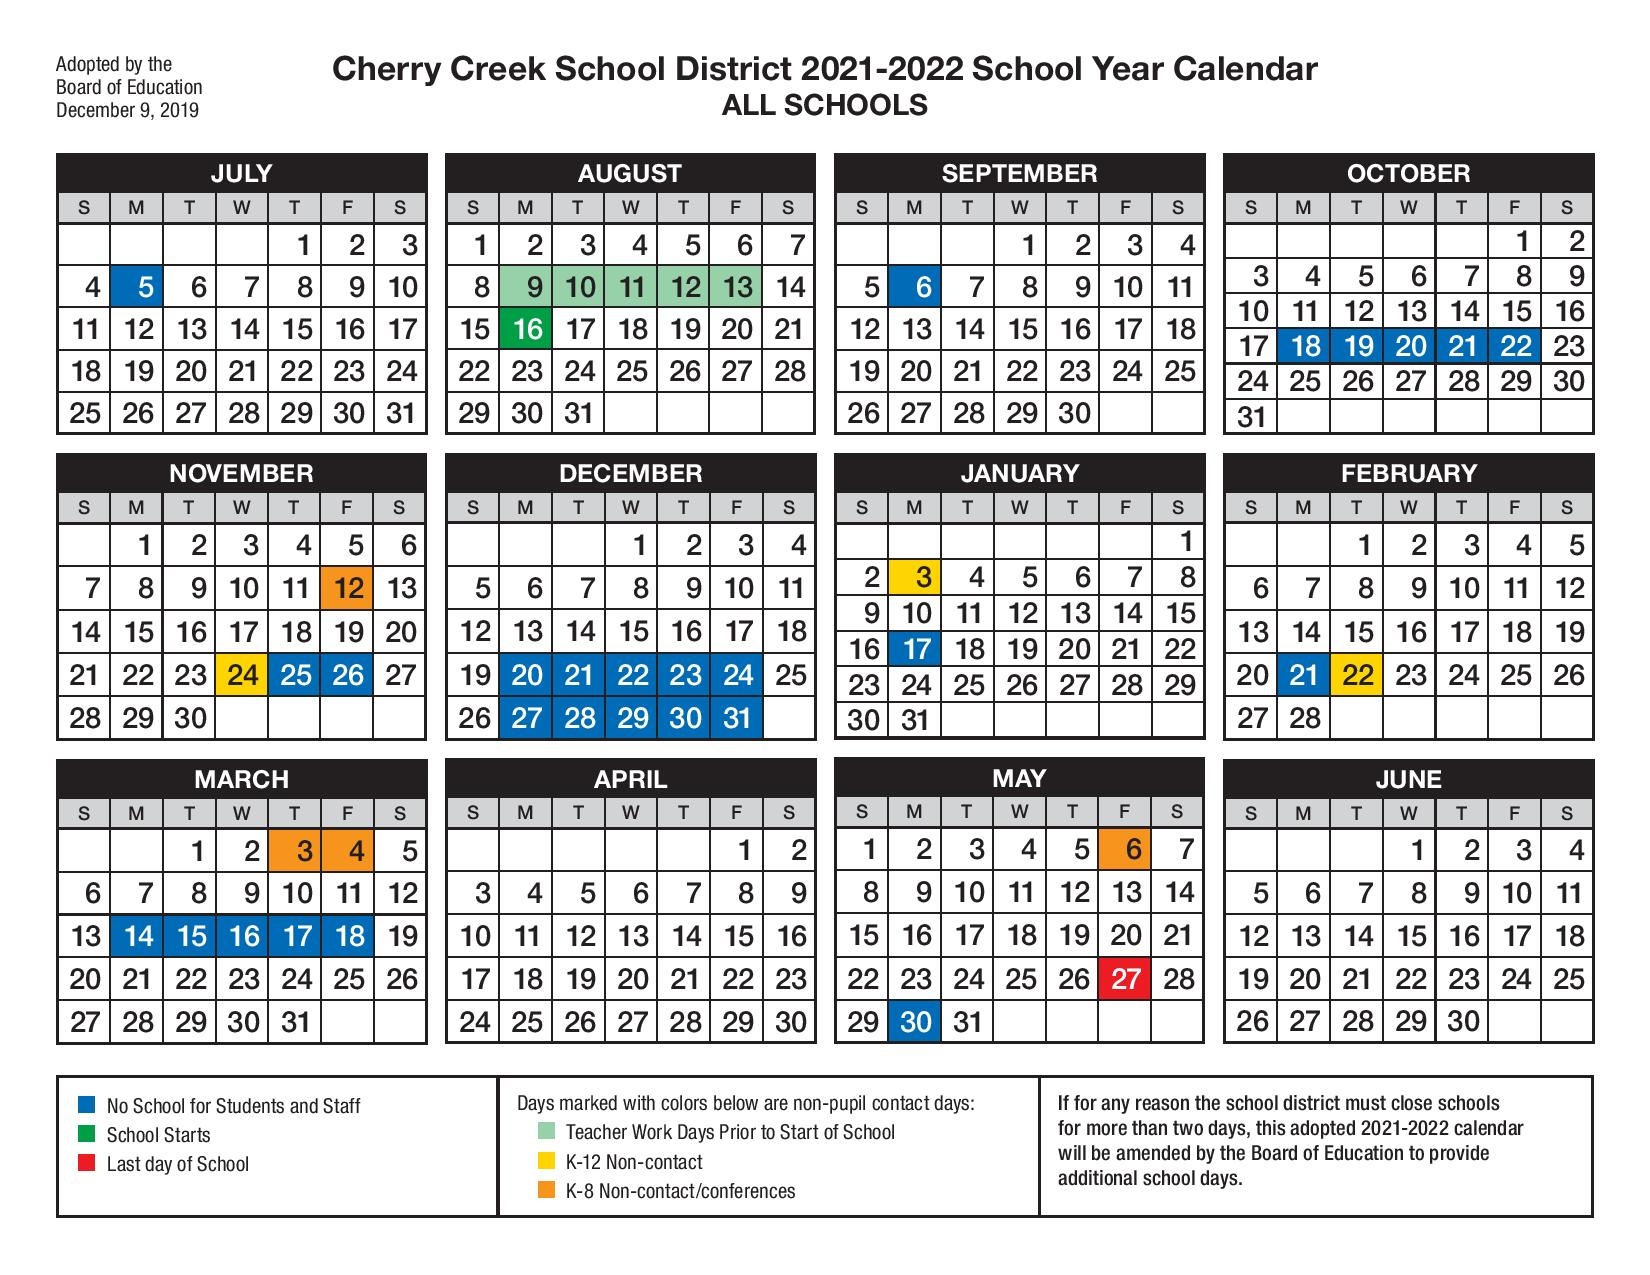 Cherry Creek School District Calendar &amp; Holidays 2021-2022